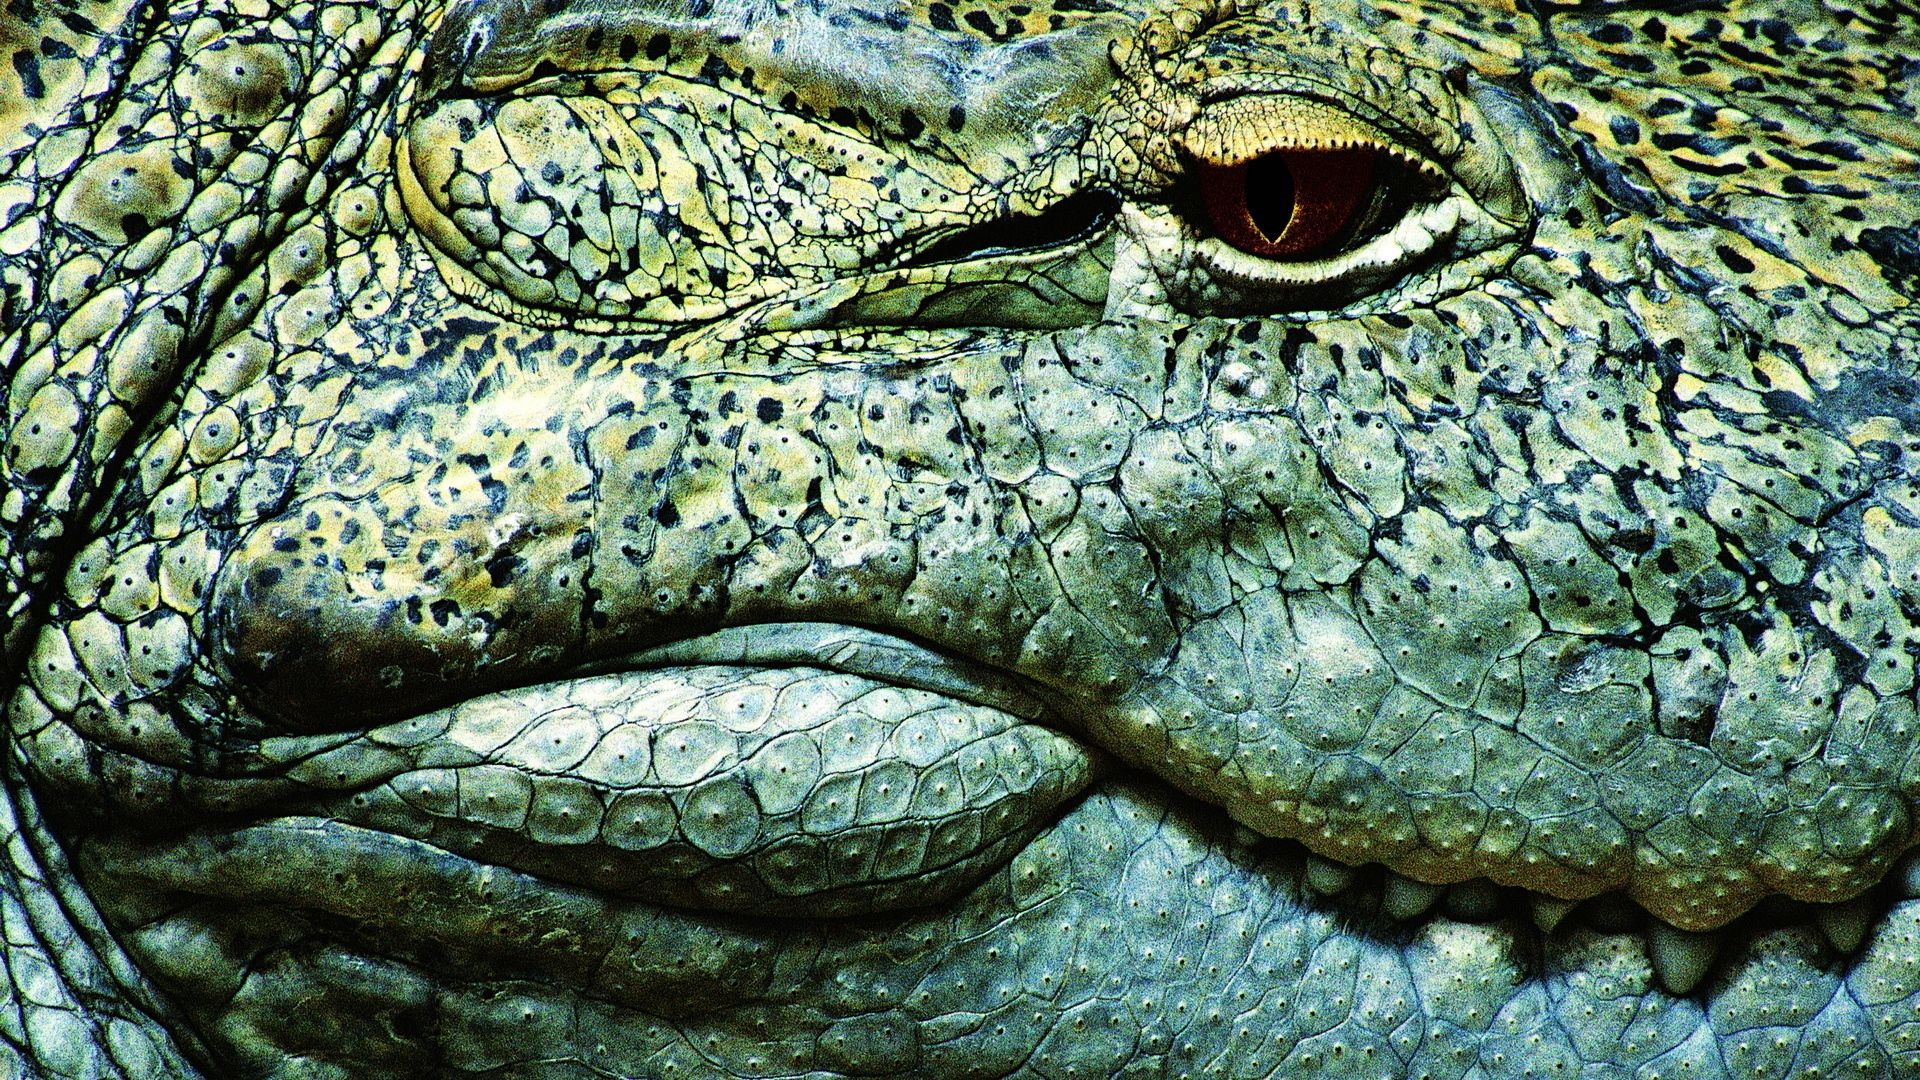 Crocodile wallpaper photo hd